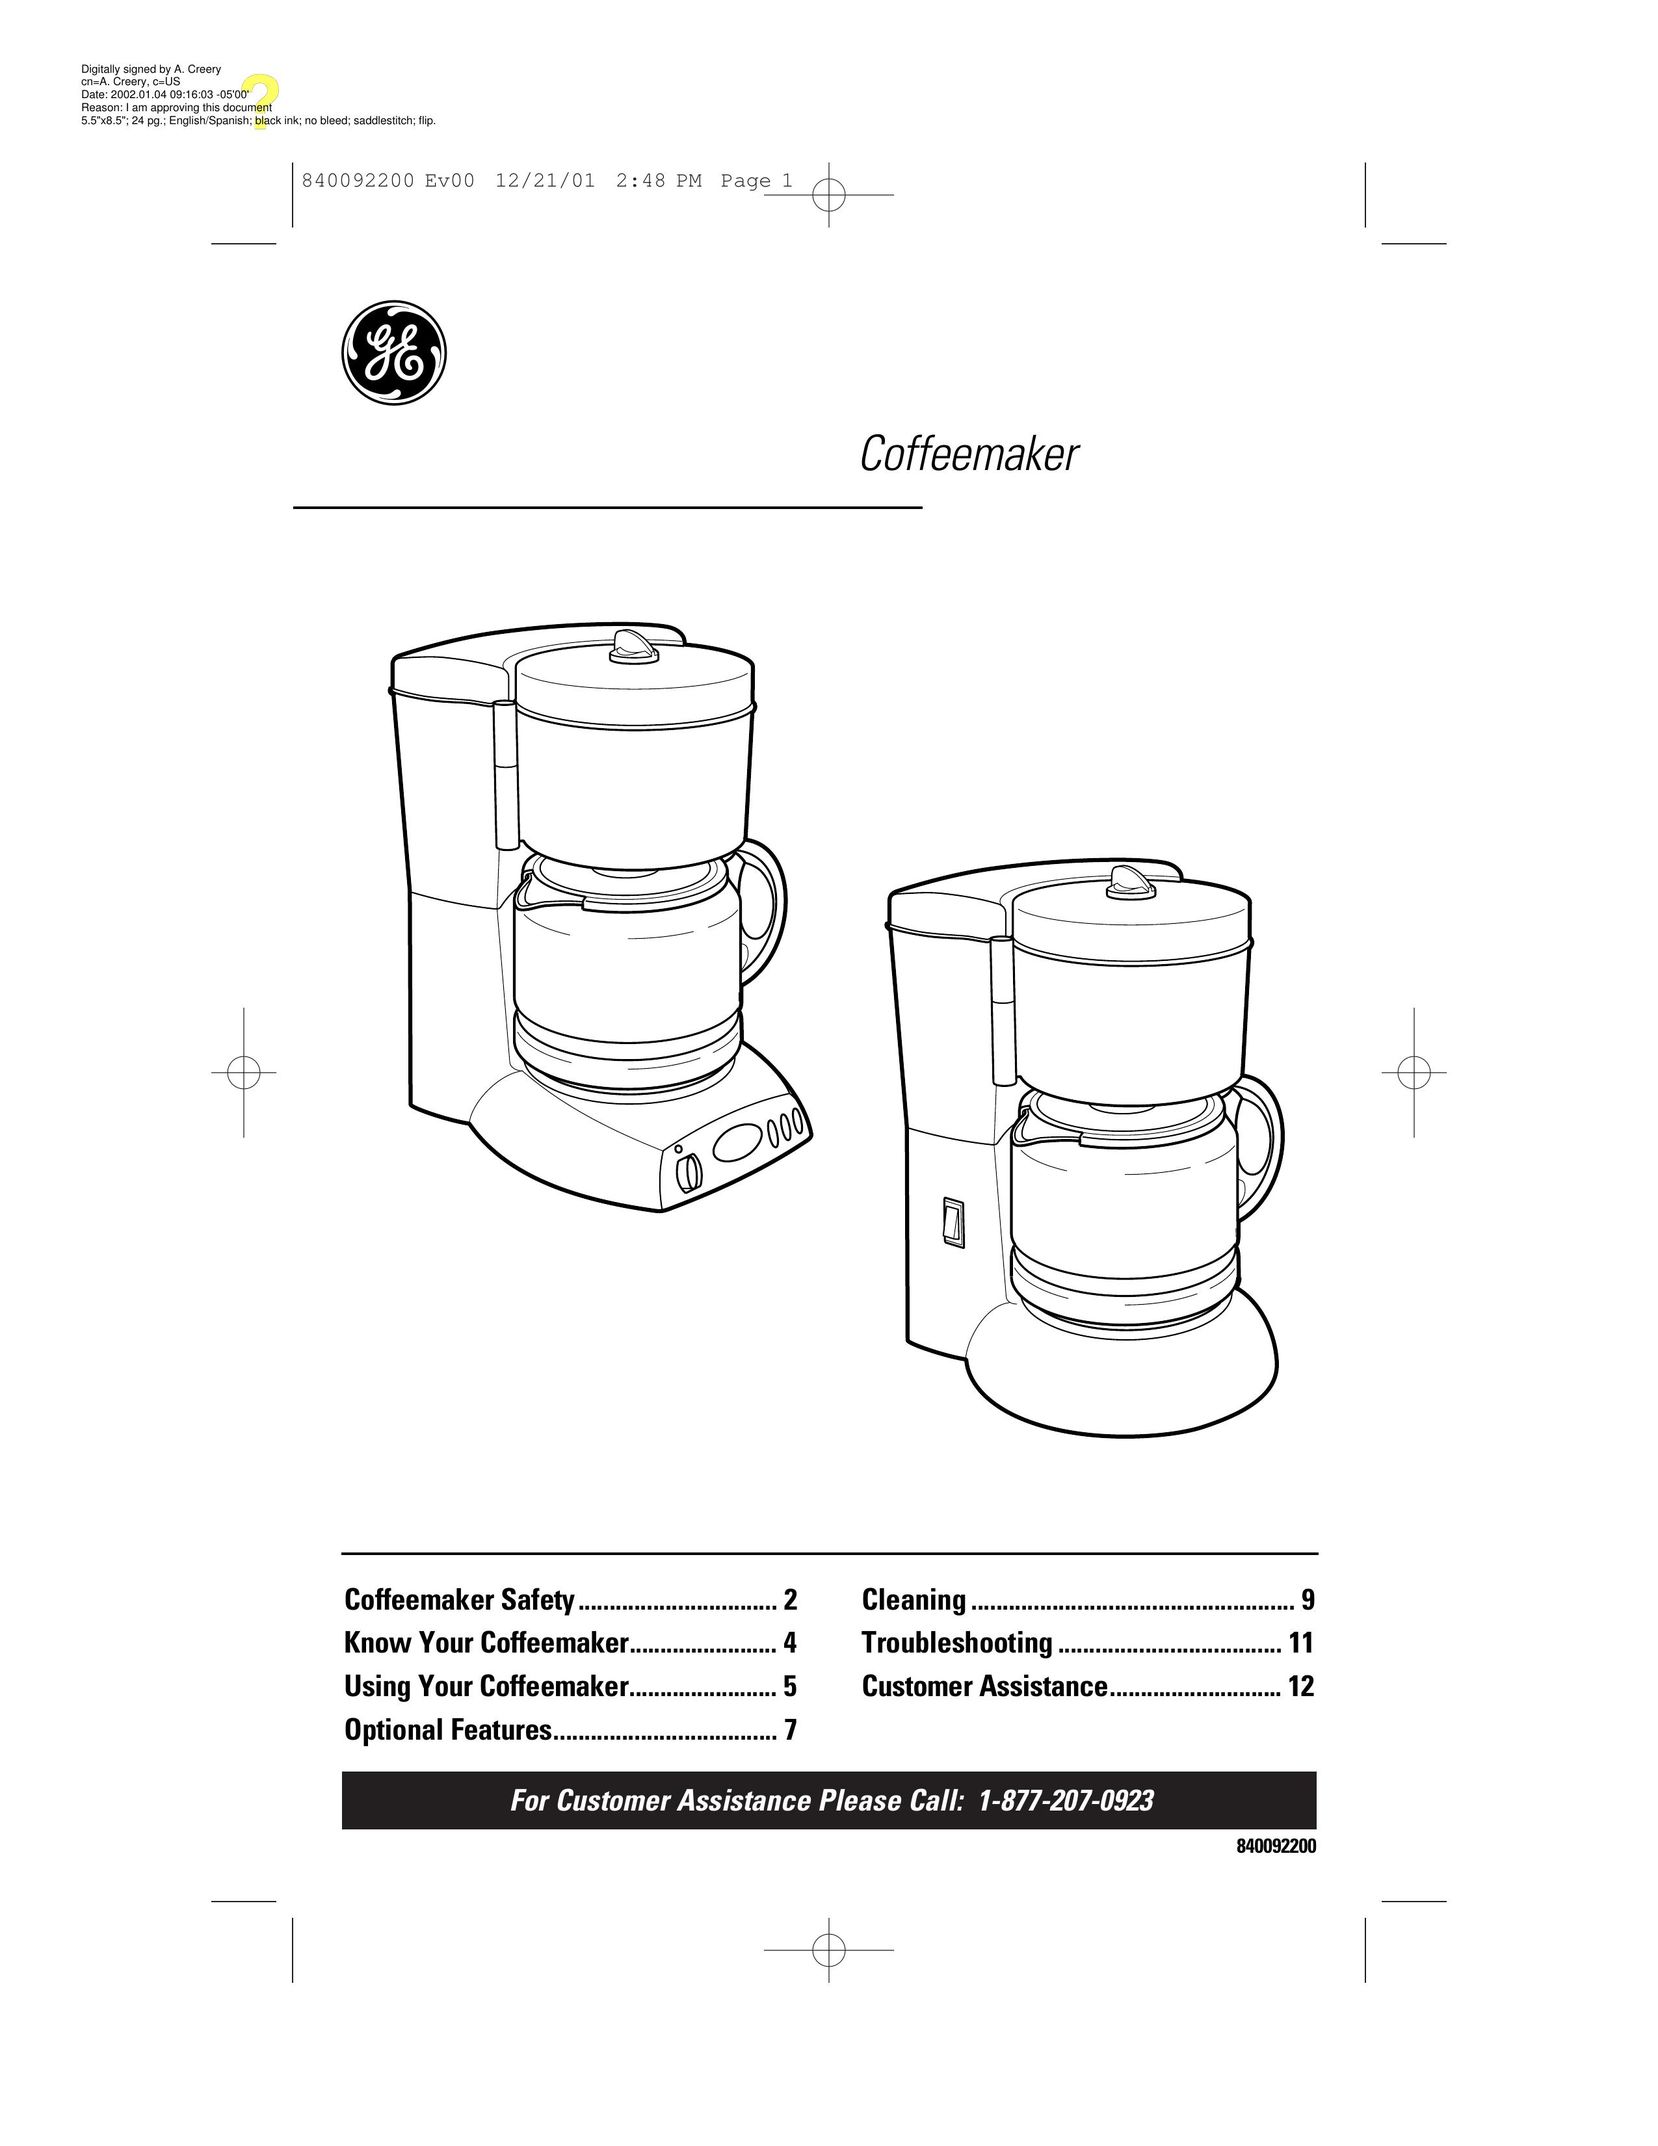 GE 840092200 Coffeemaker User Manual